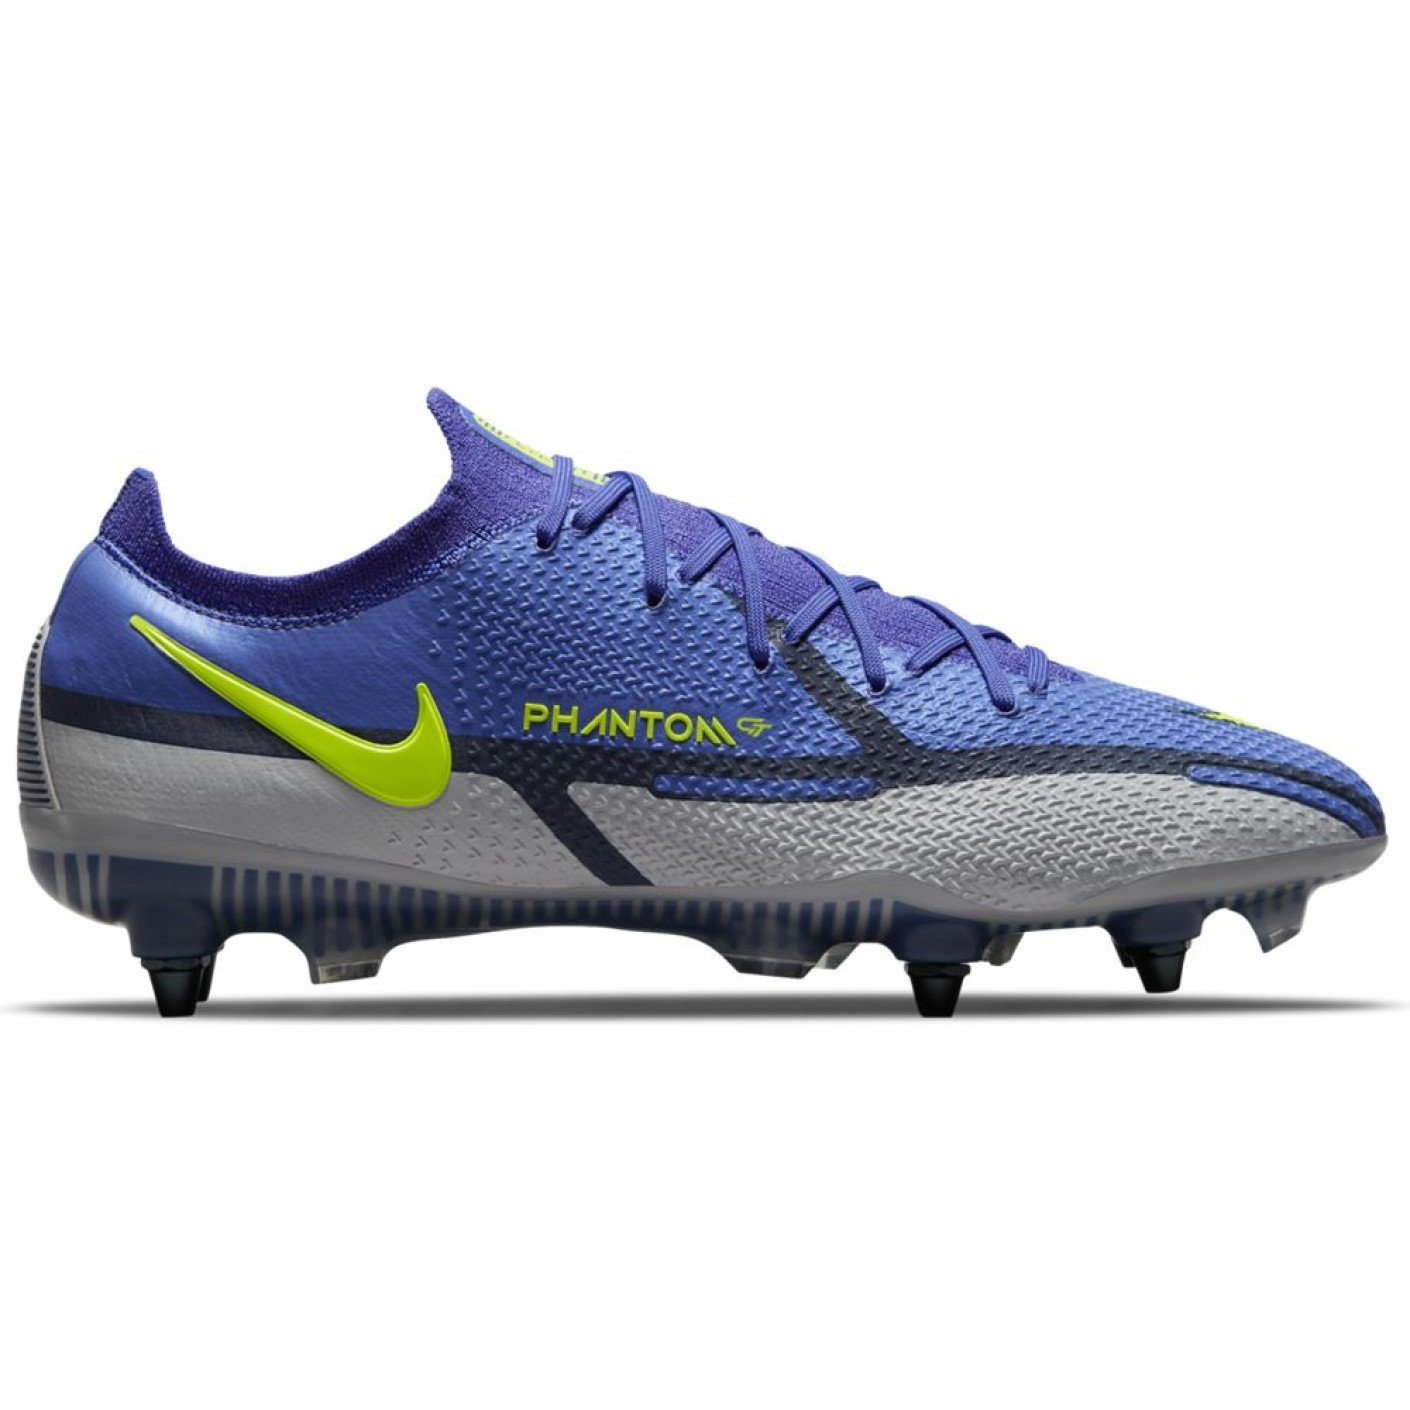 Chaussure de foot basse à crampons pour terrain gras Nike Phantom